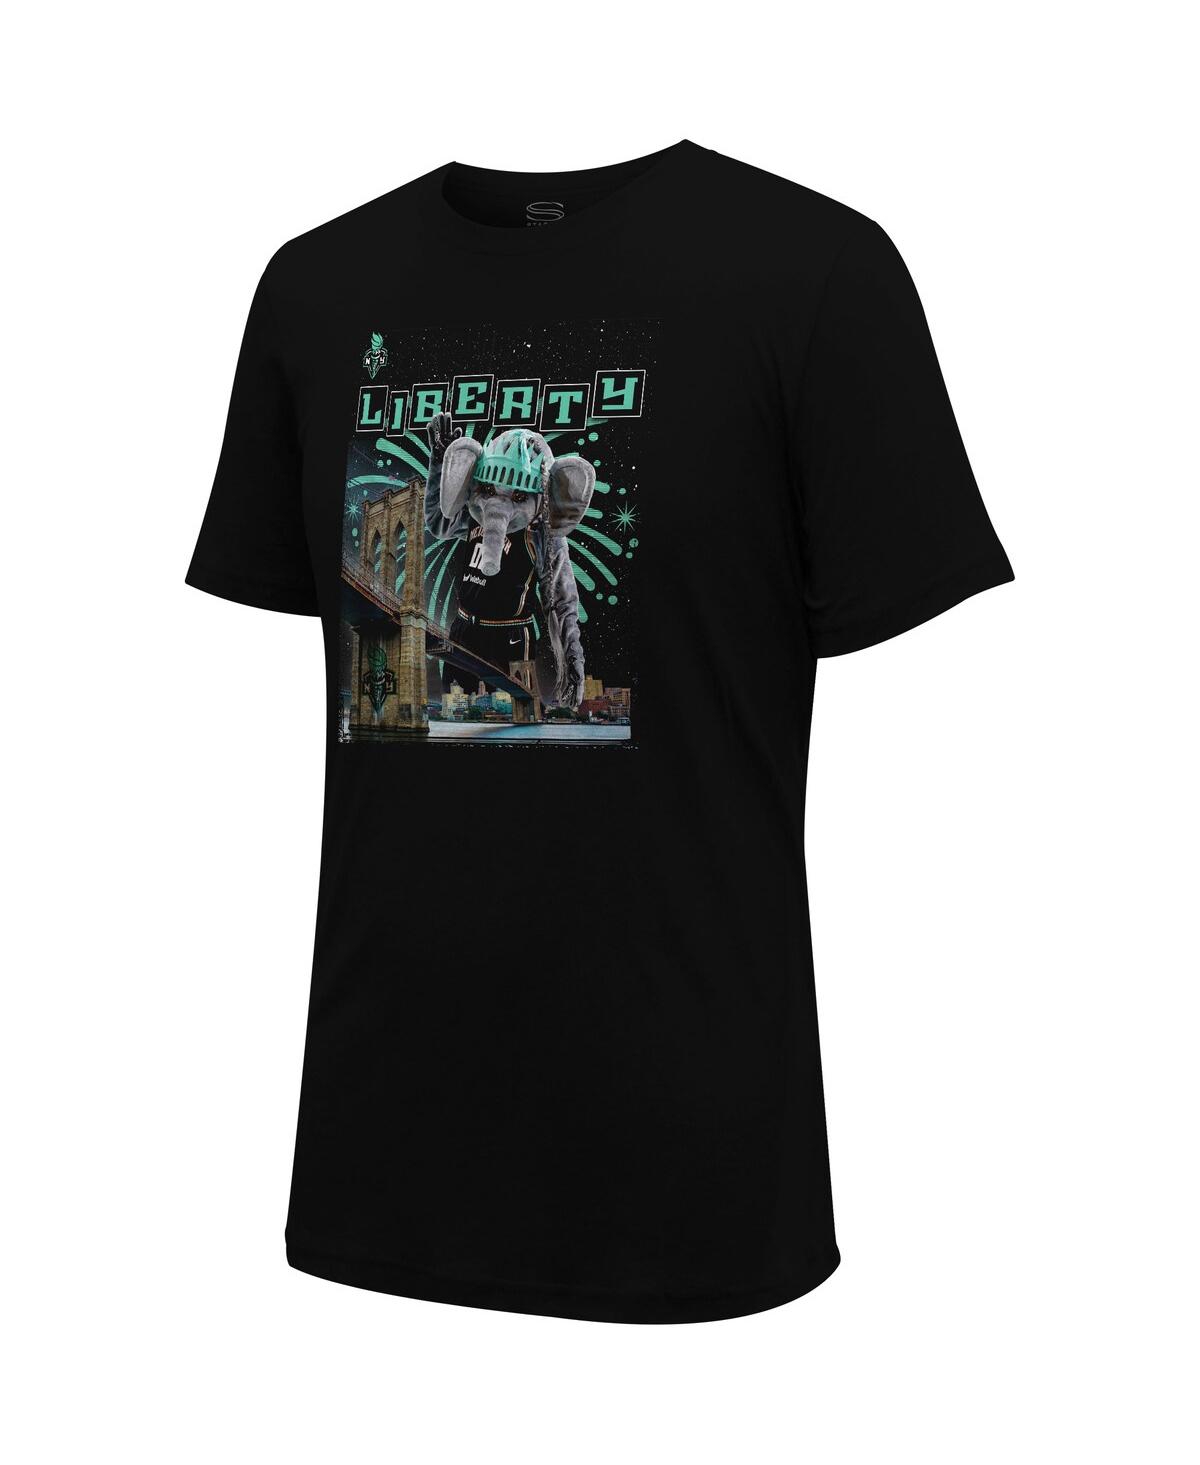 Men's and Women's Stadium Essentials Black New York Liberty Mascot Mania T-shirt - Black